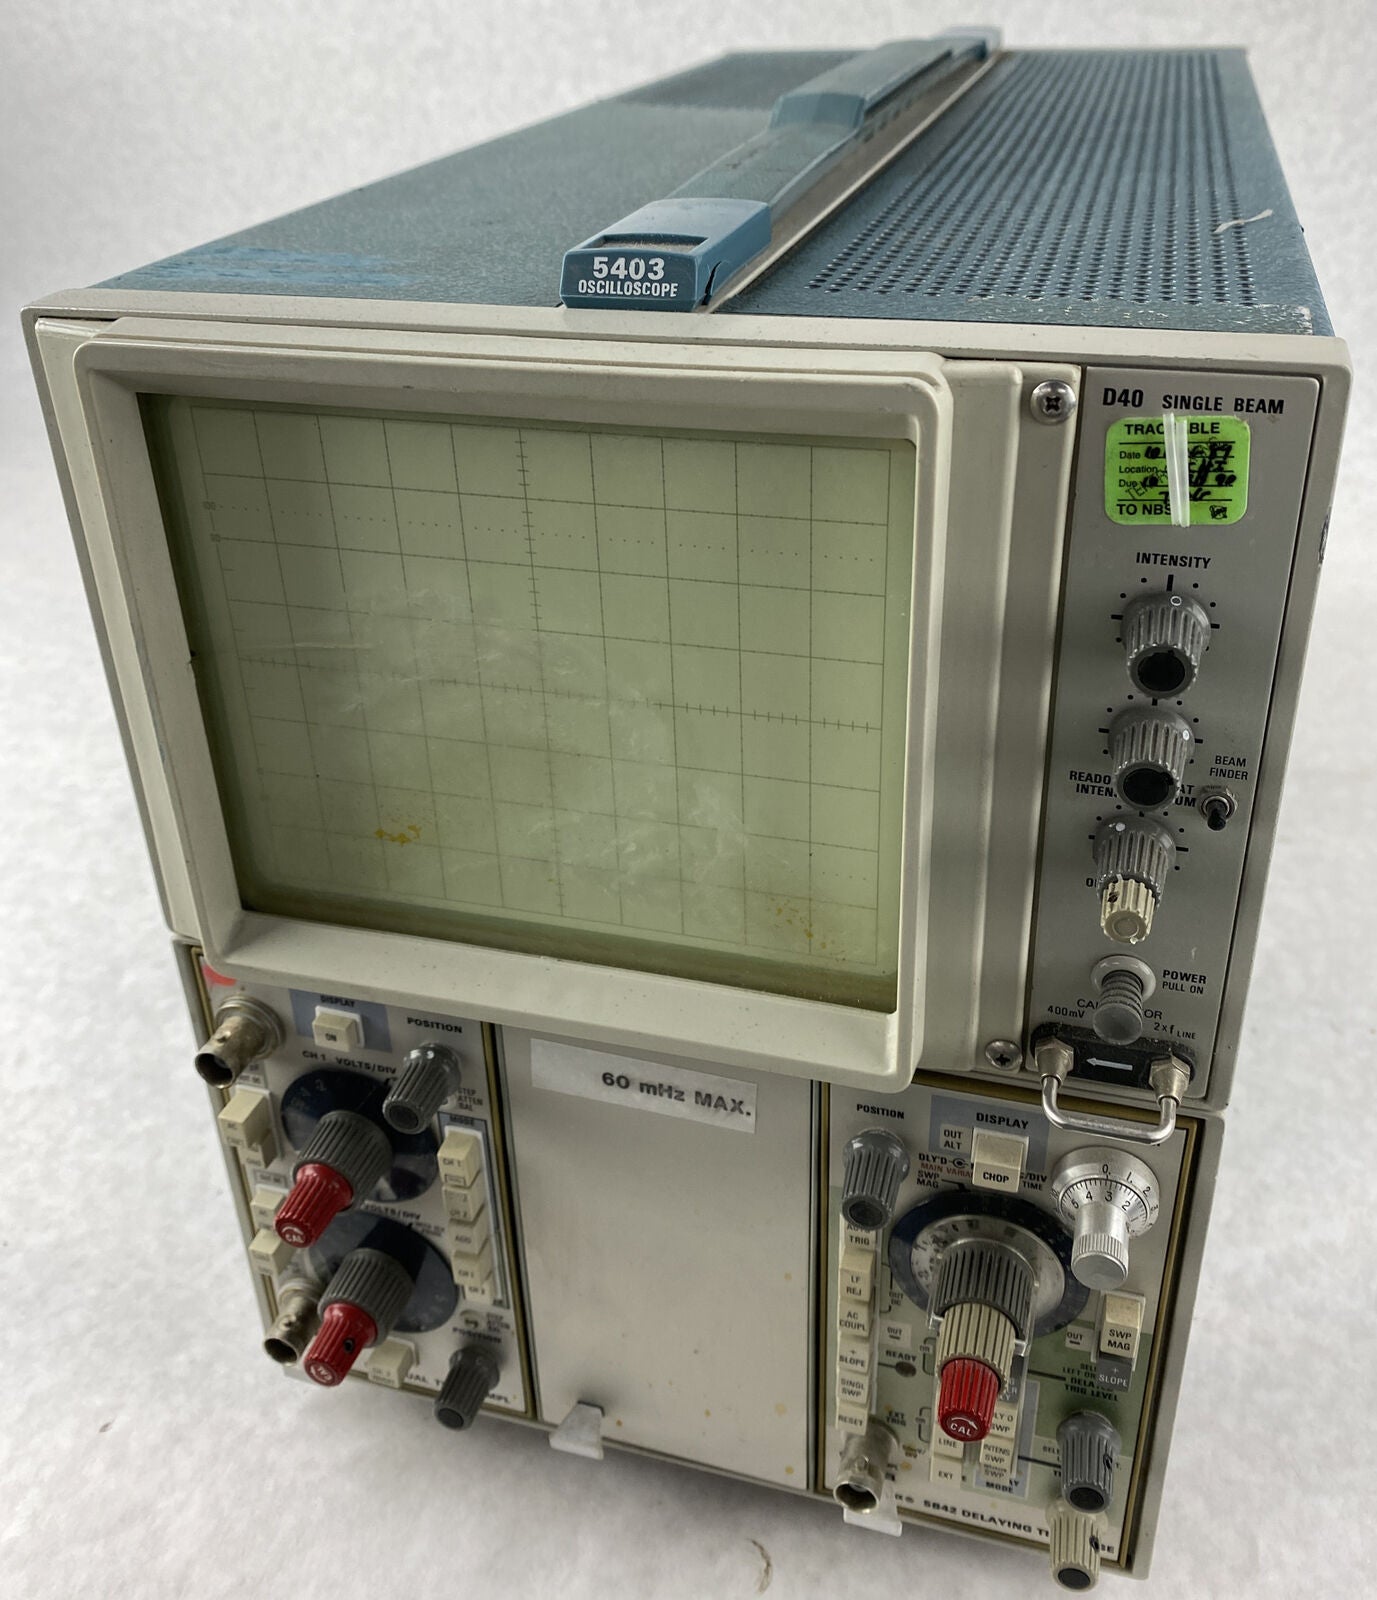 Tektronix 5403 Oscilloscope POWERS ON